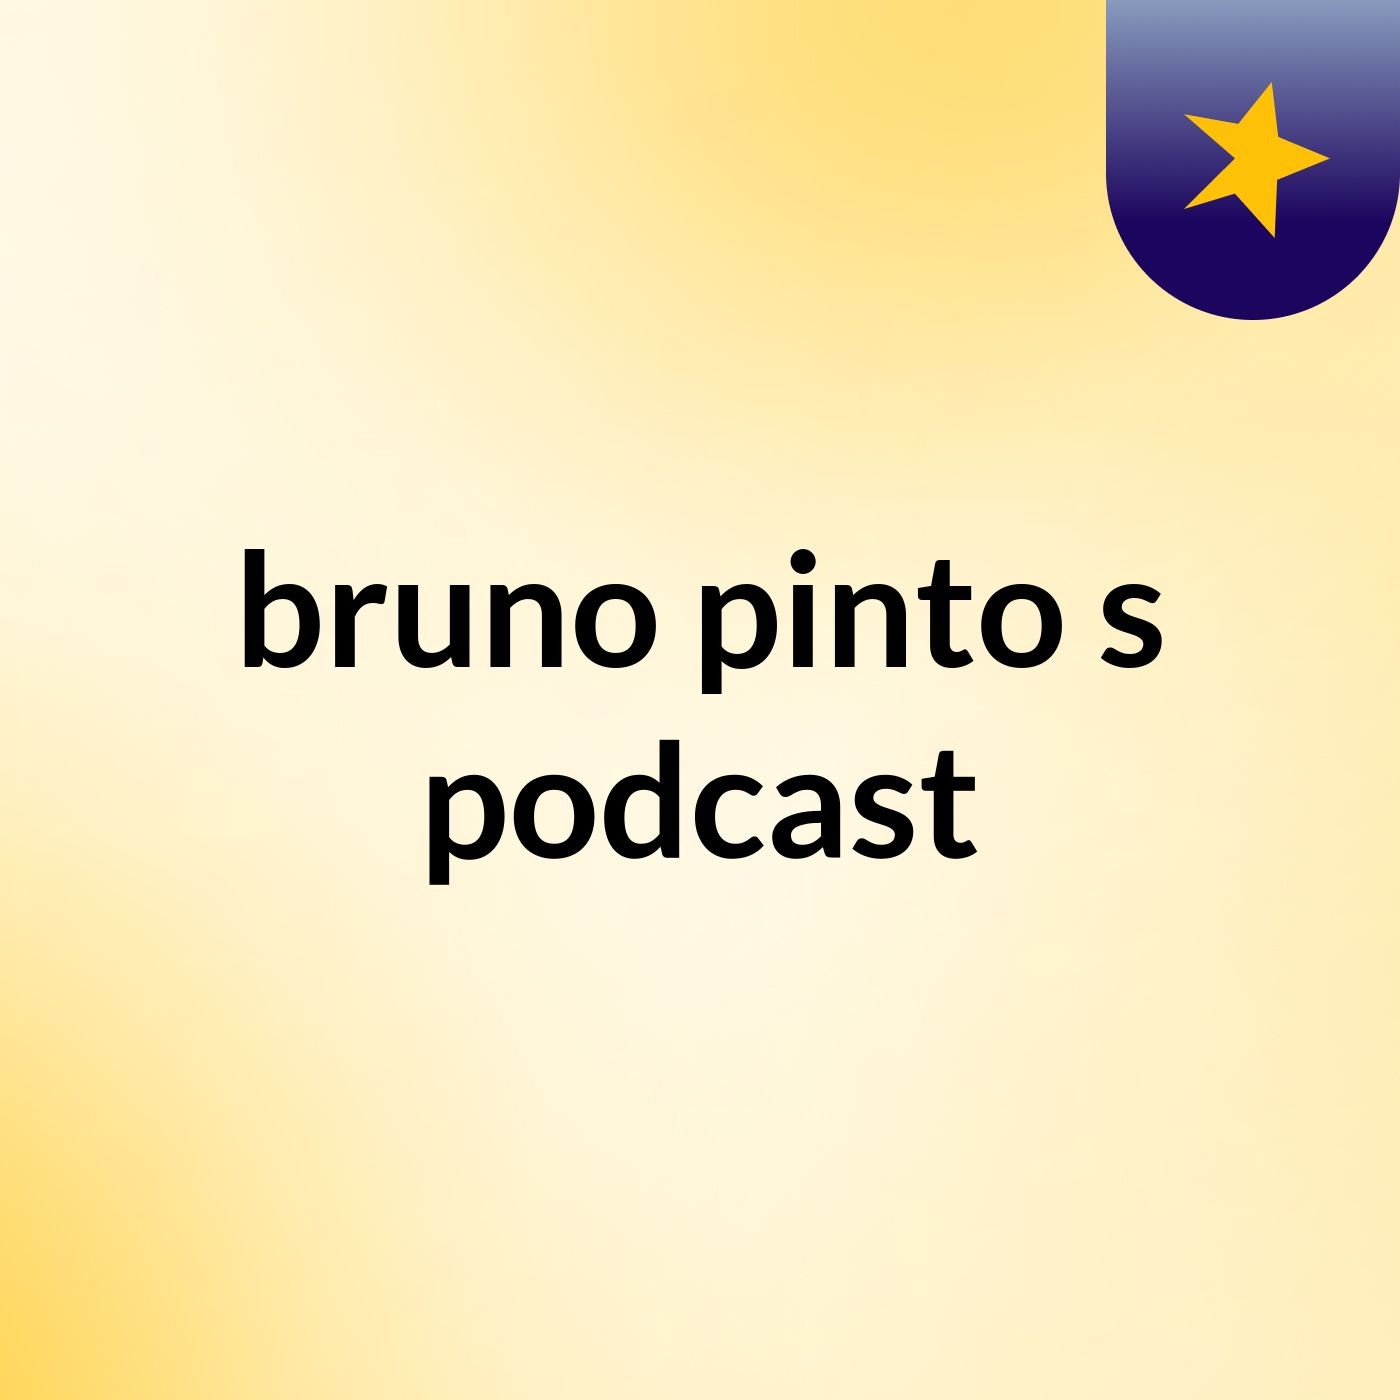 bruno pinto's podcast